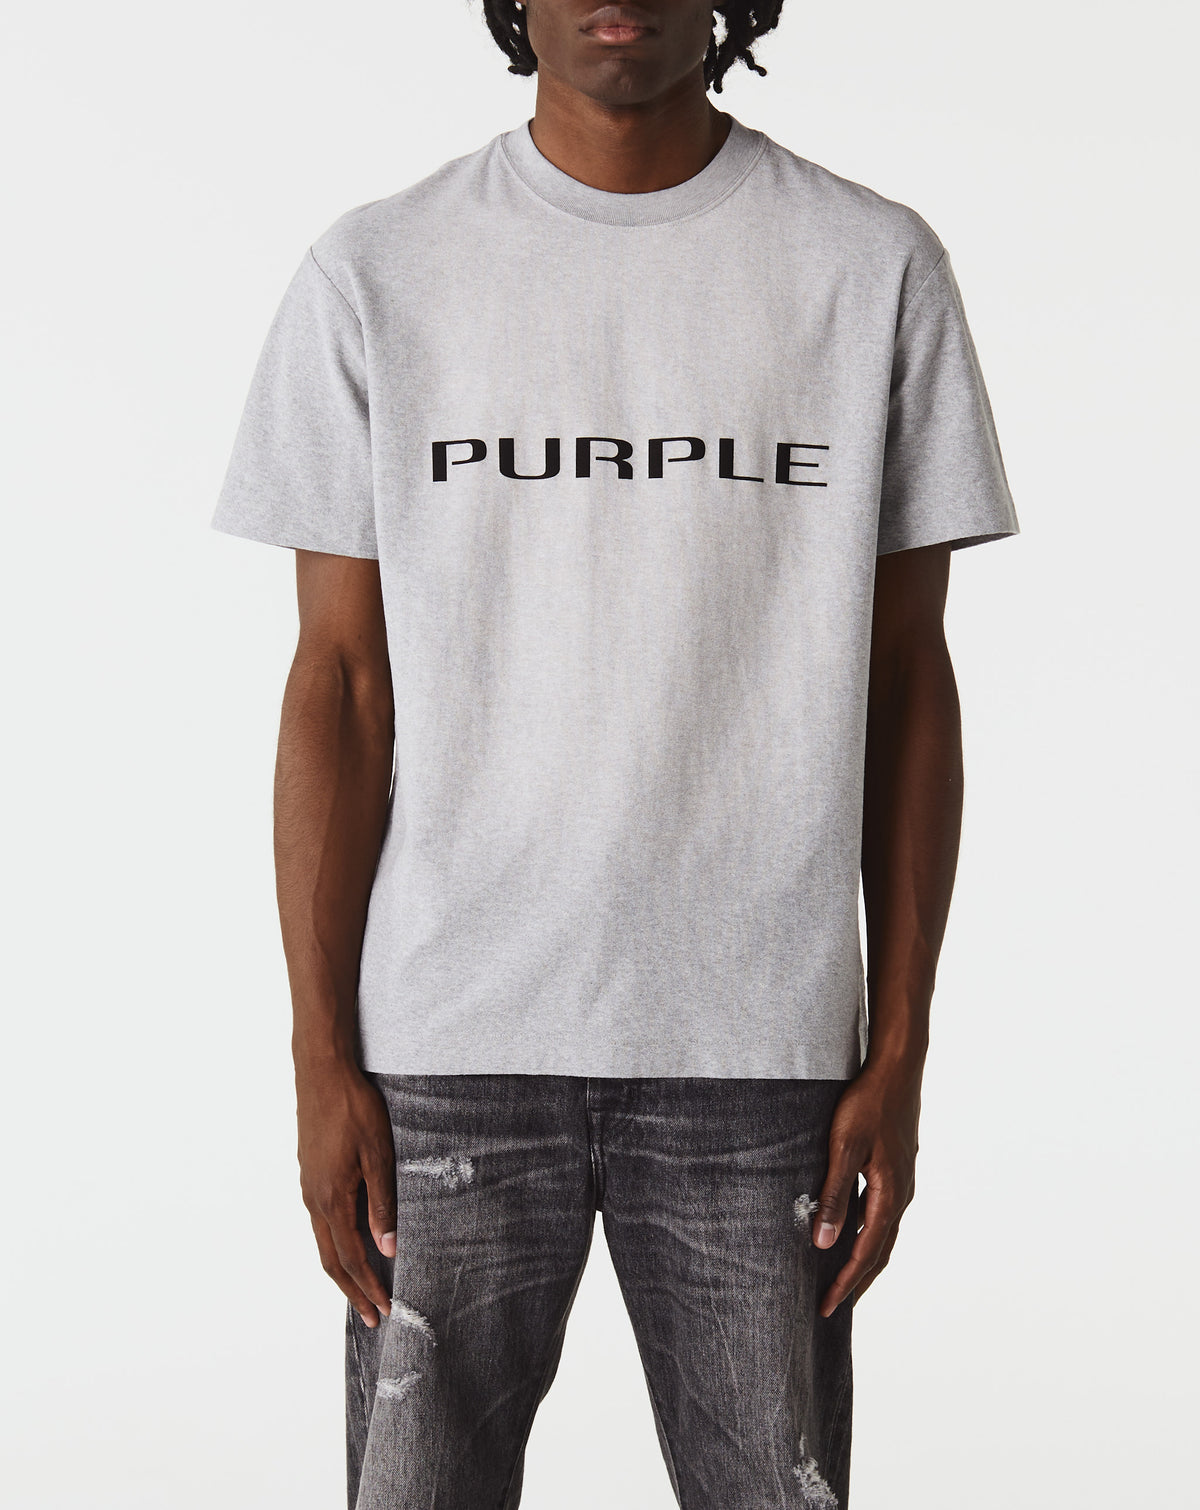 Purple Brand Textured Jersey T-Shirt - Rule of Next Apparel